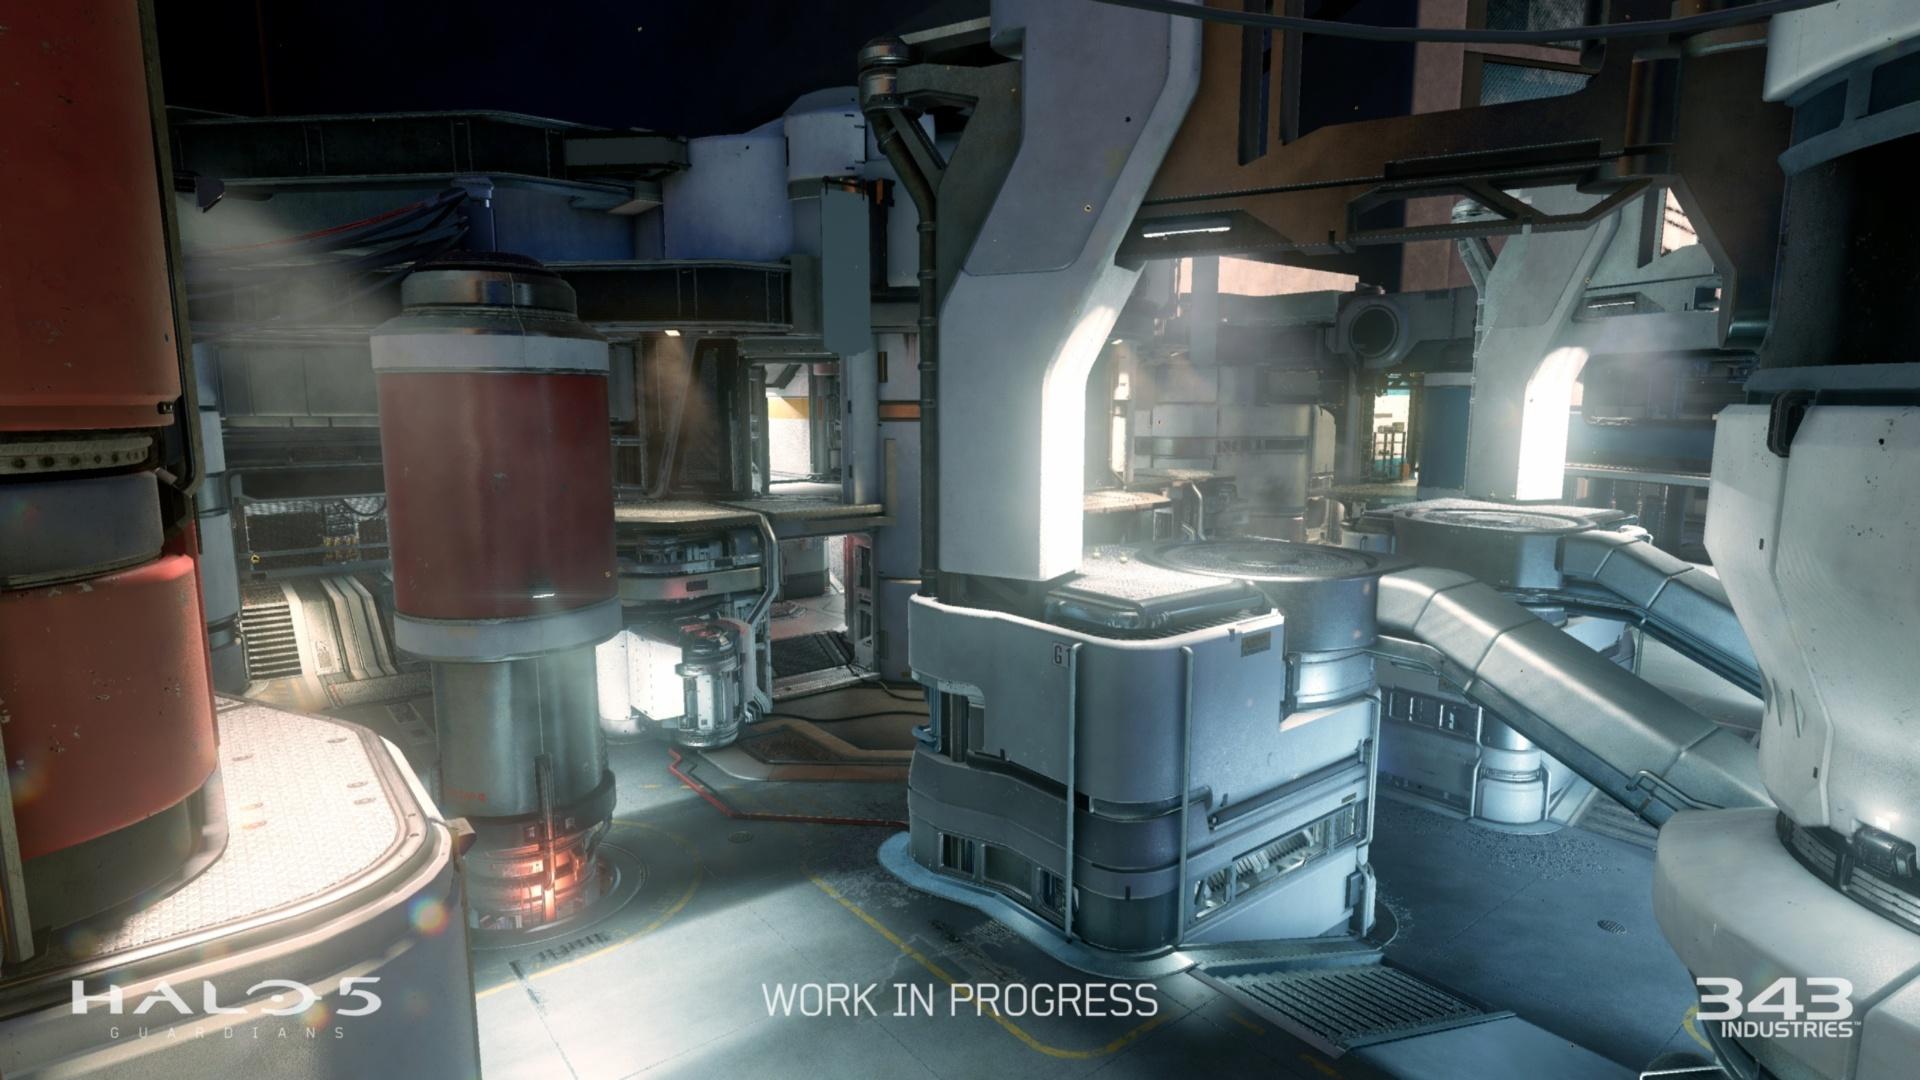 Halo 5: Guardians screenshot 2147